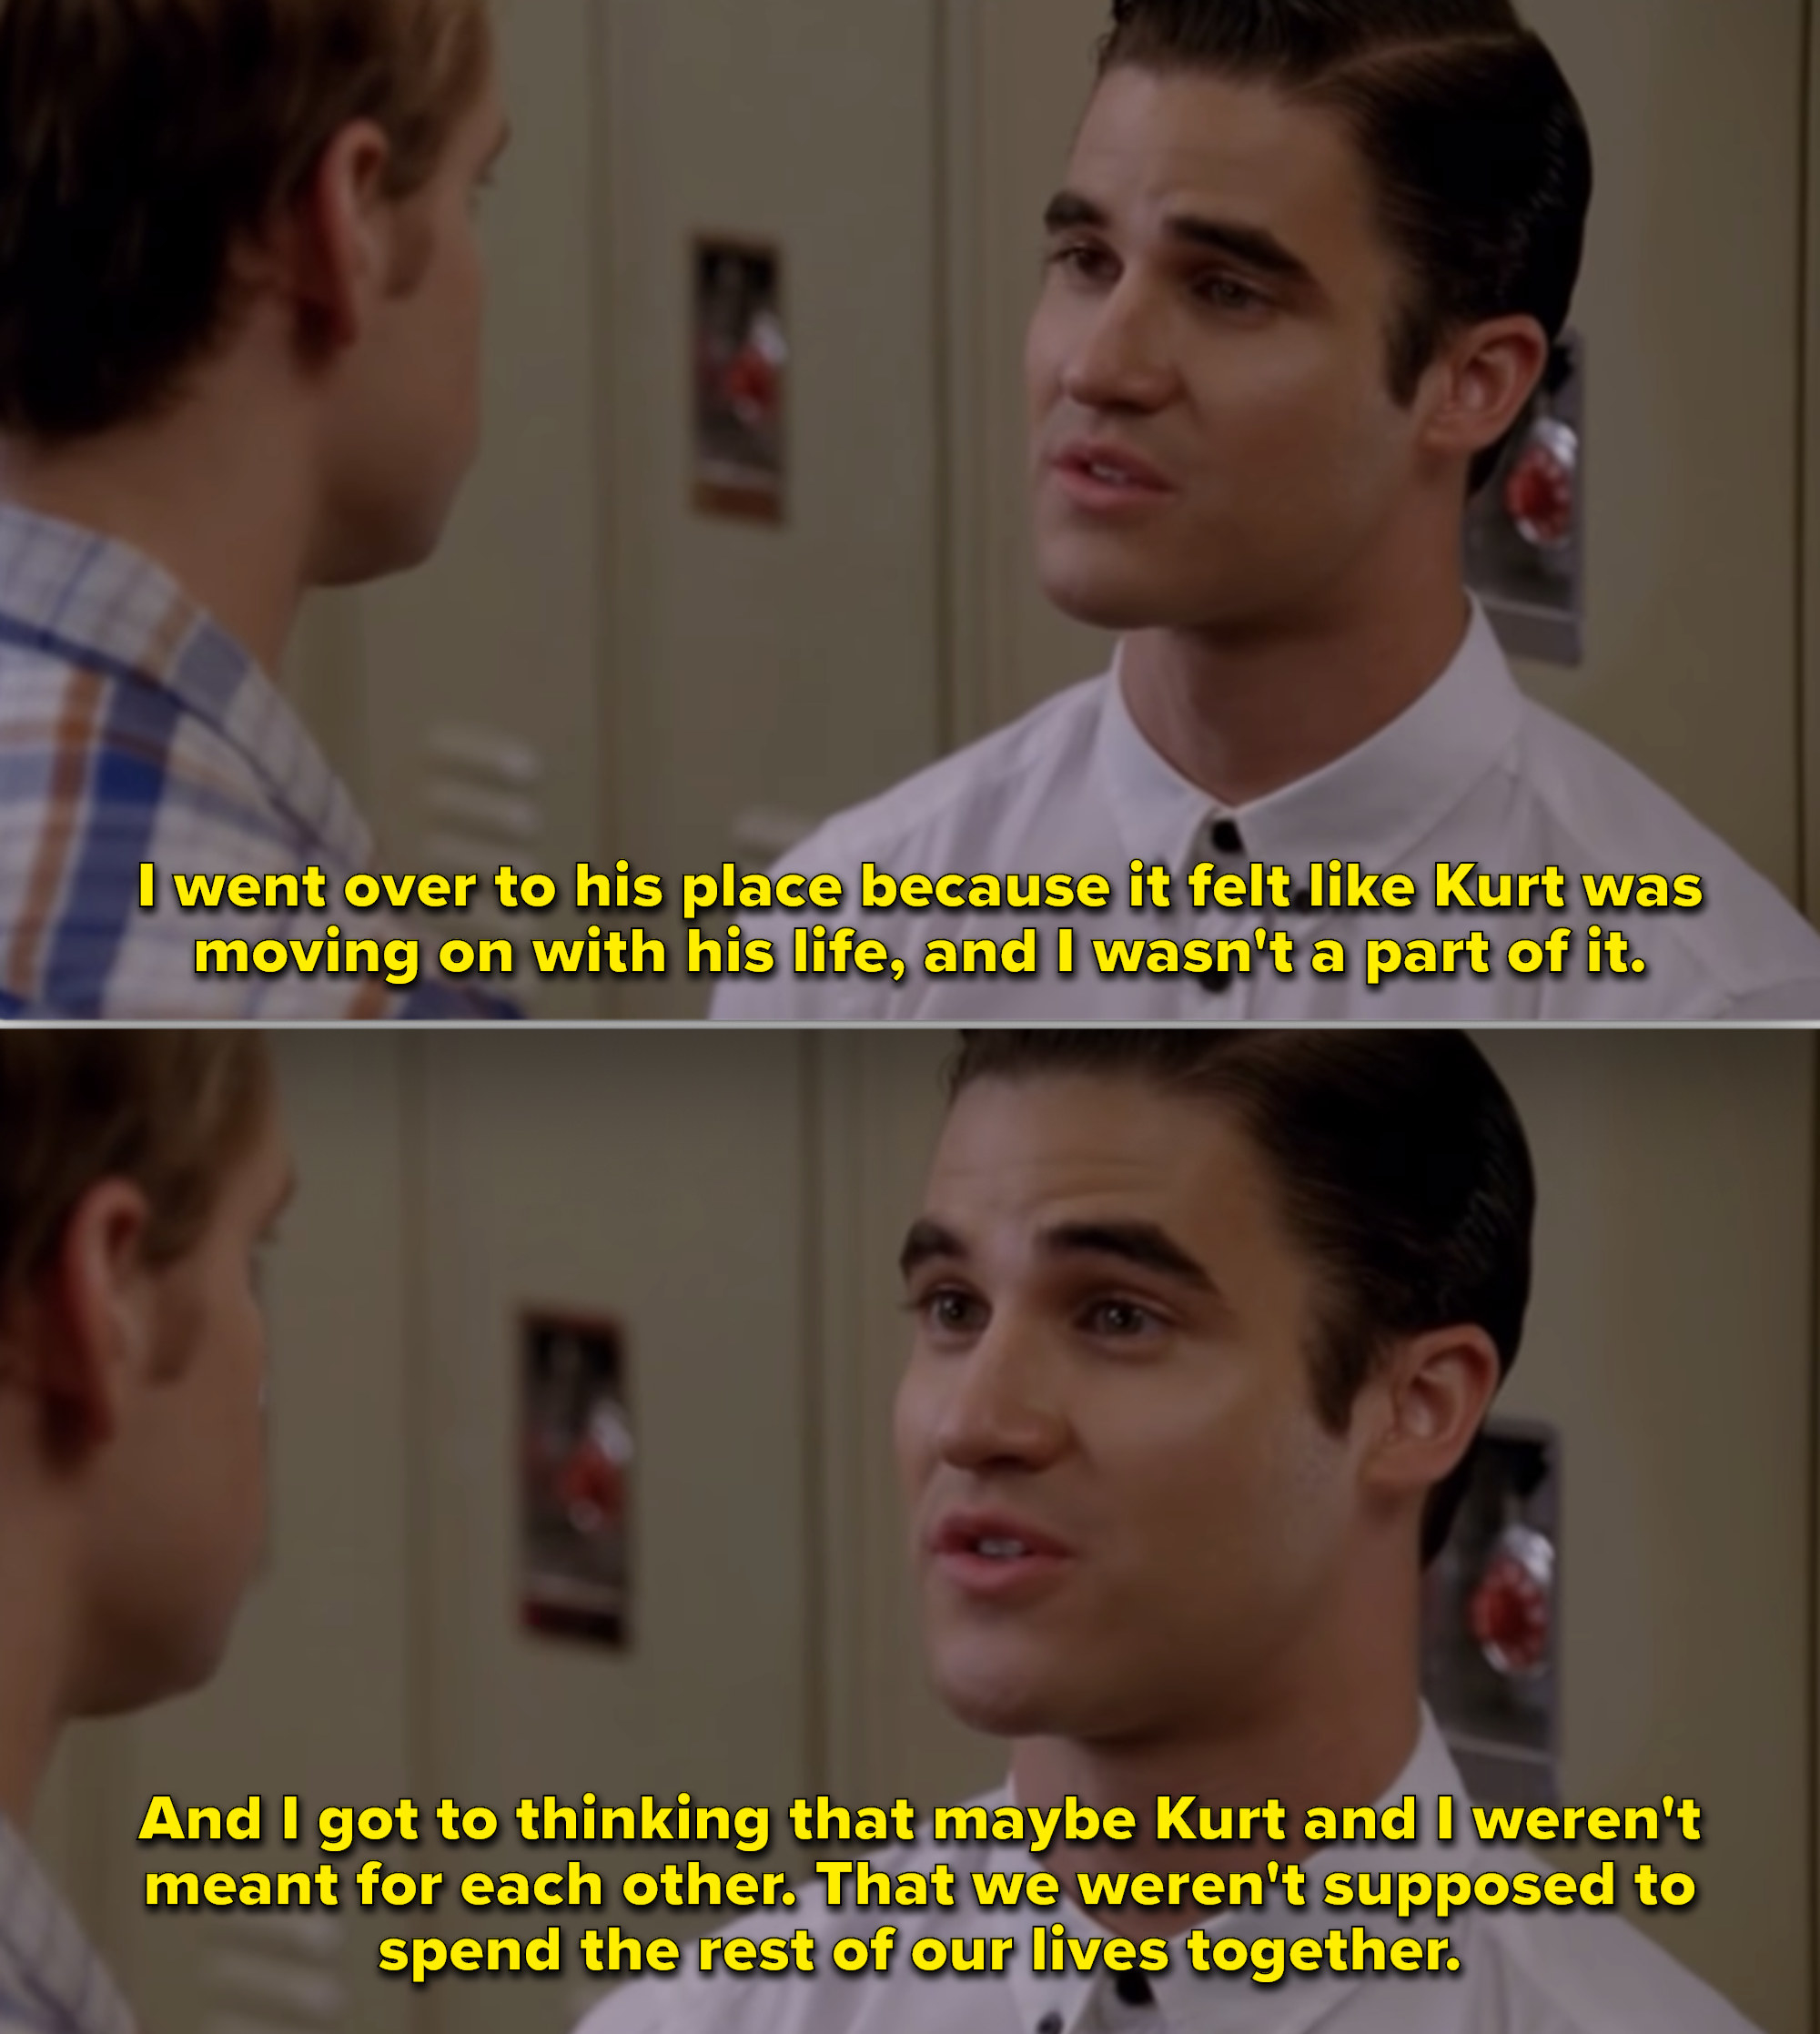 Kurt in the school by the lockers